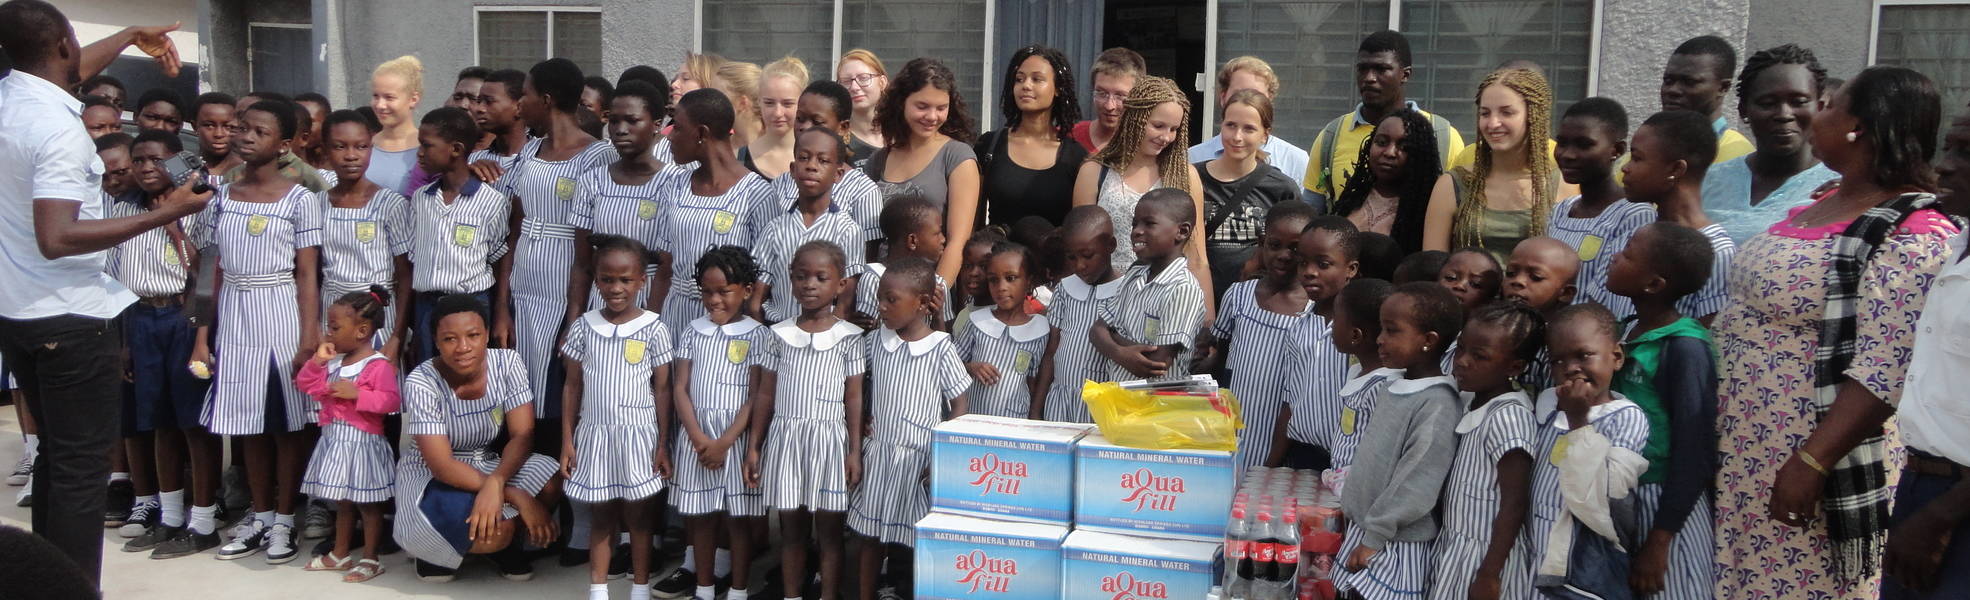 Donation in Ghana